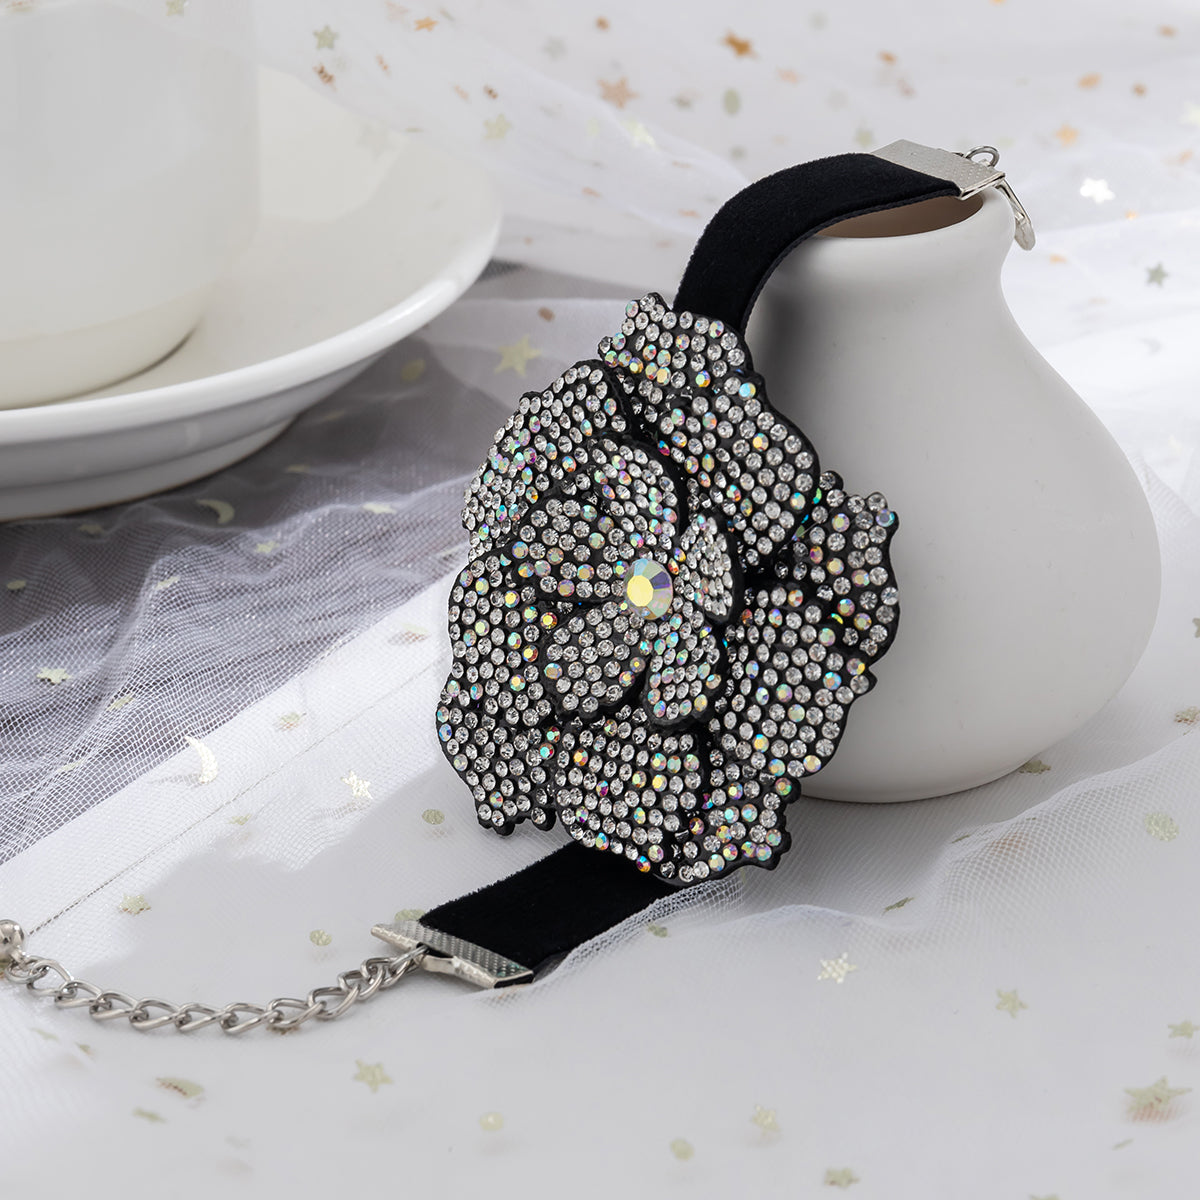 Glam Retro Exaggerated Flower Cloth Inlay Rhinestones Women's Bracelets Necklace